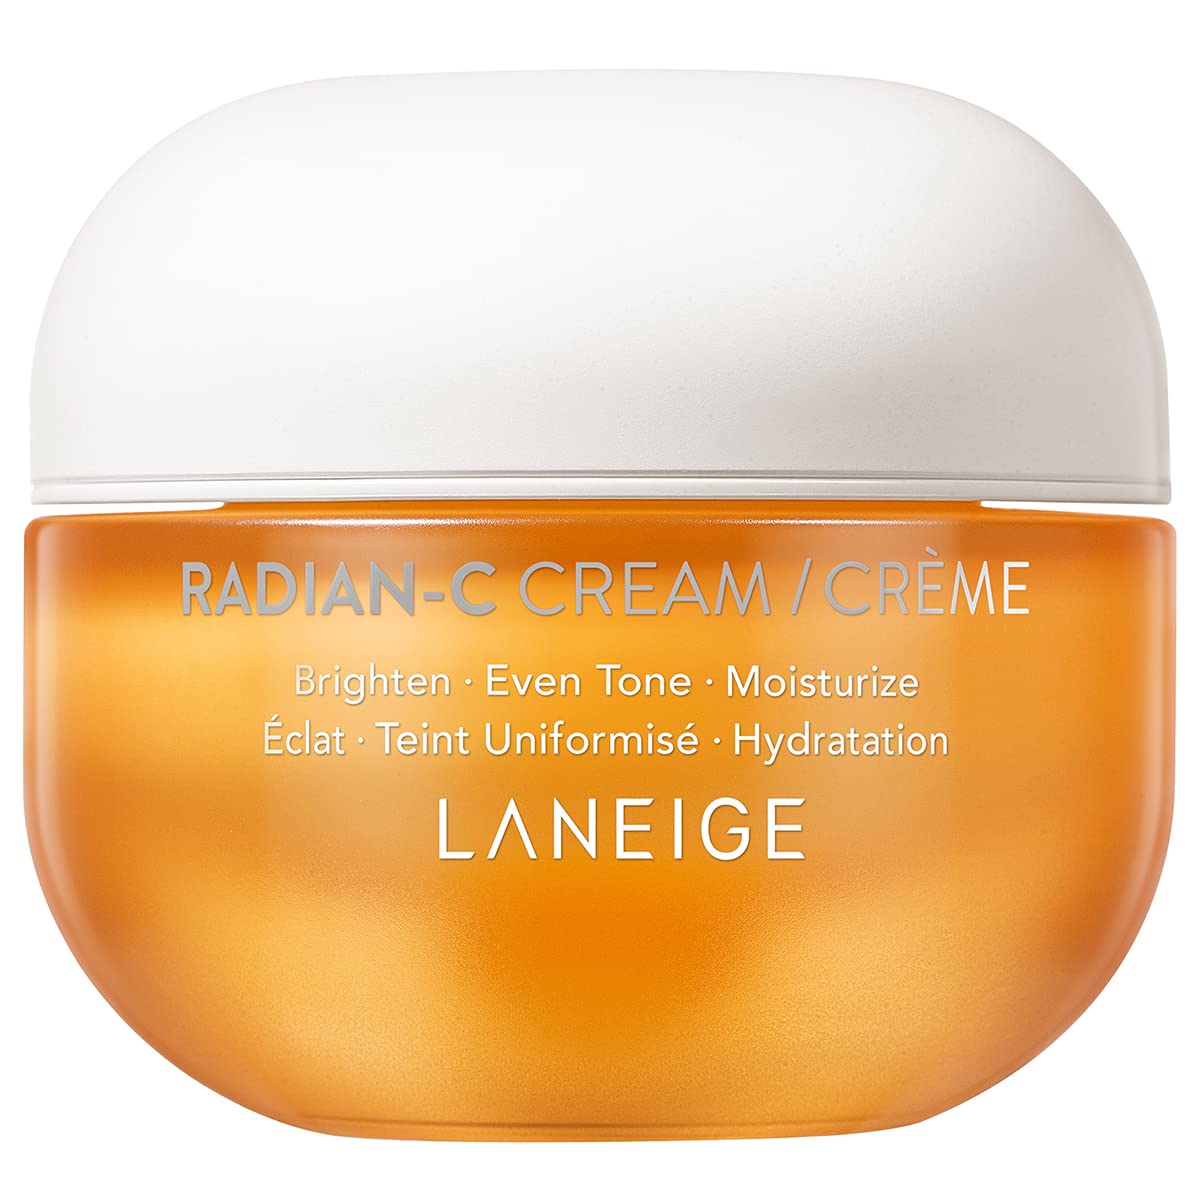 LANEIgE Radian-c cream: Hydrate, Visibly Brighten & Reduce Look of Dark Spots with Vitamin c EAE & Vitamin E, 10 fl oz